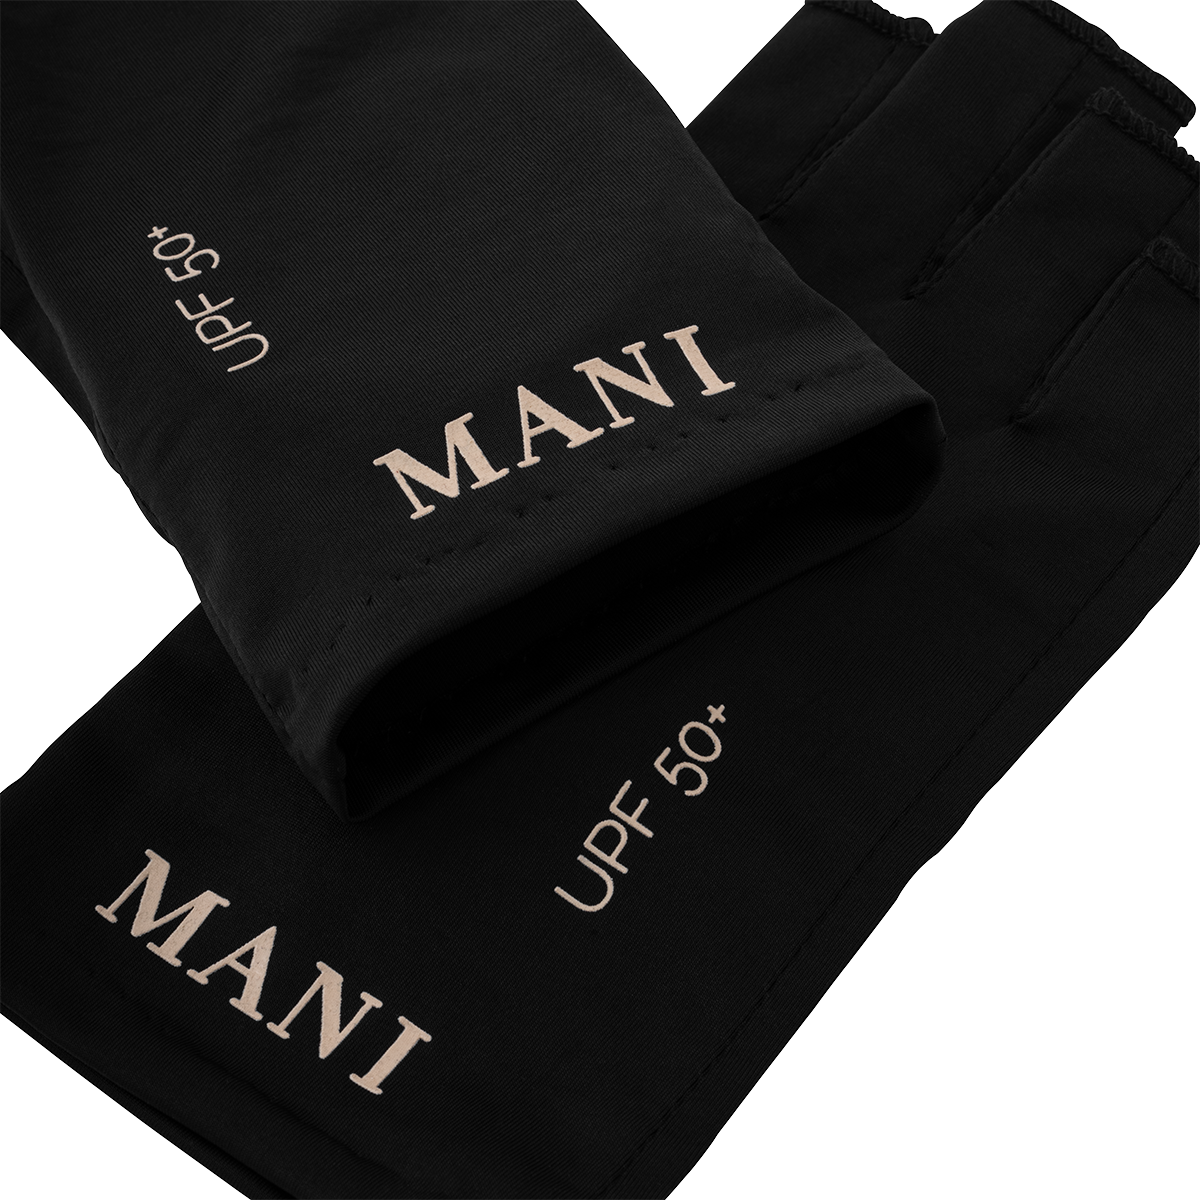 Mani Bodycare - UV Protective Manicure Gloves UPF50+